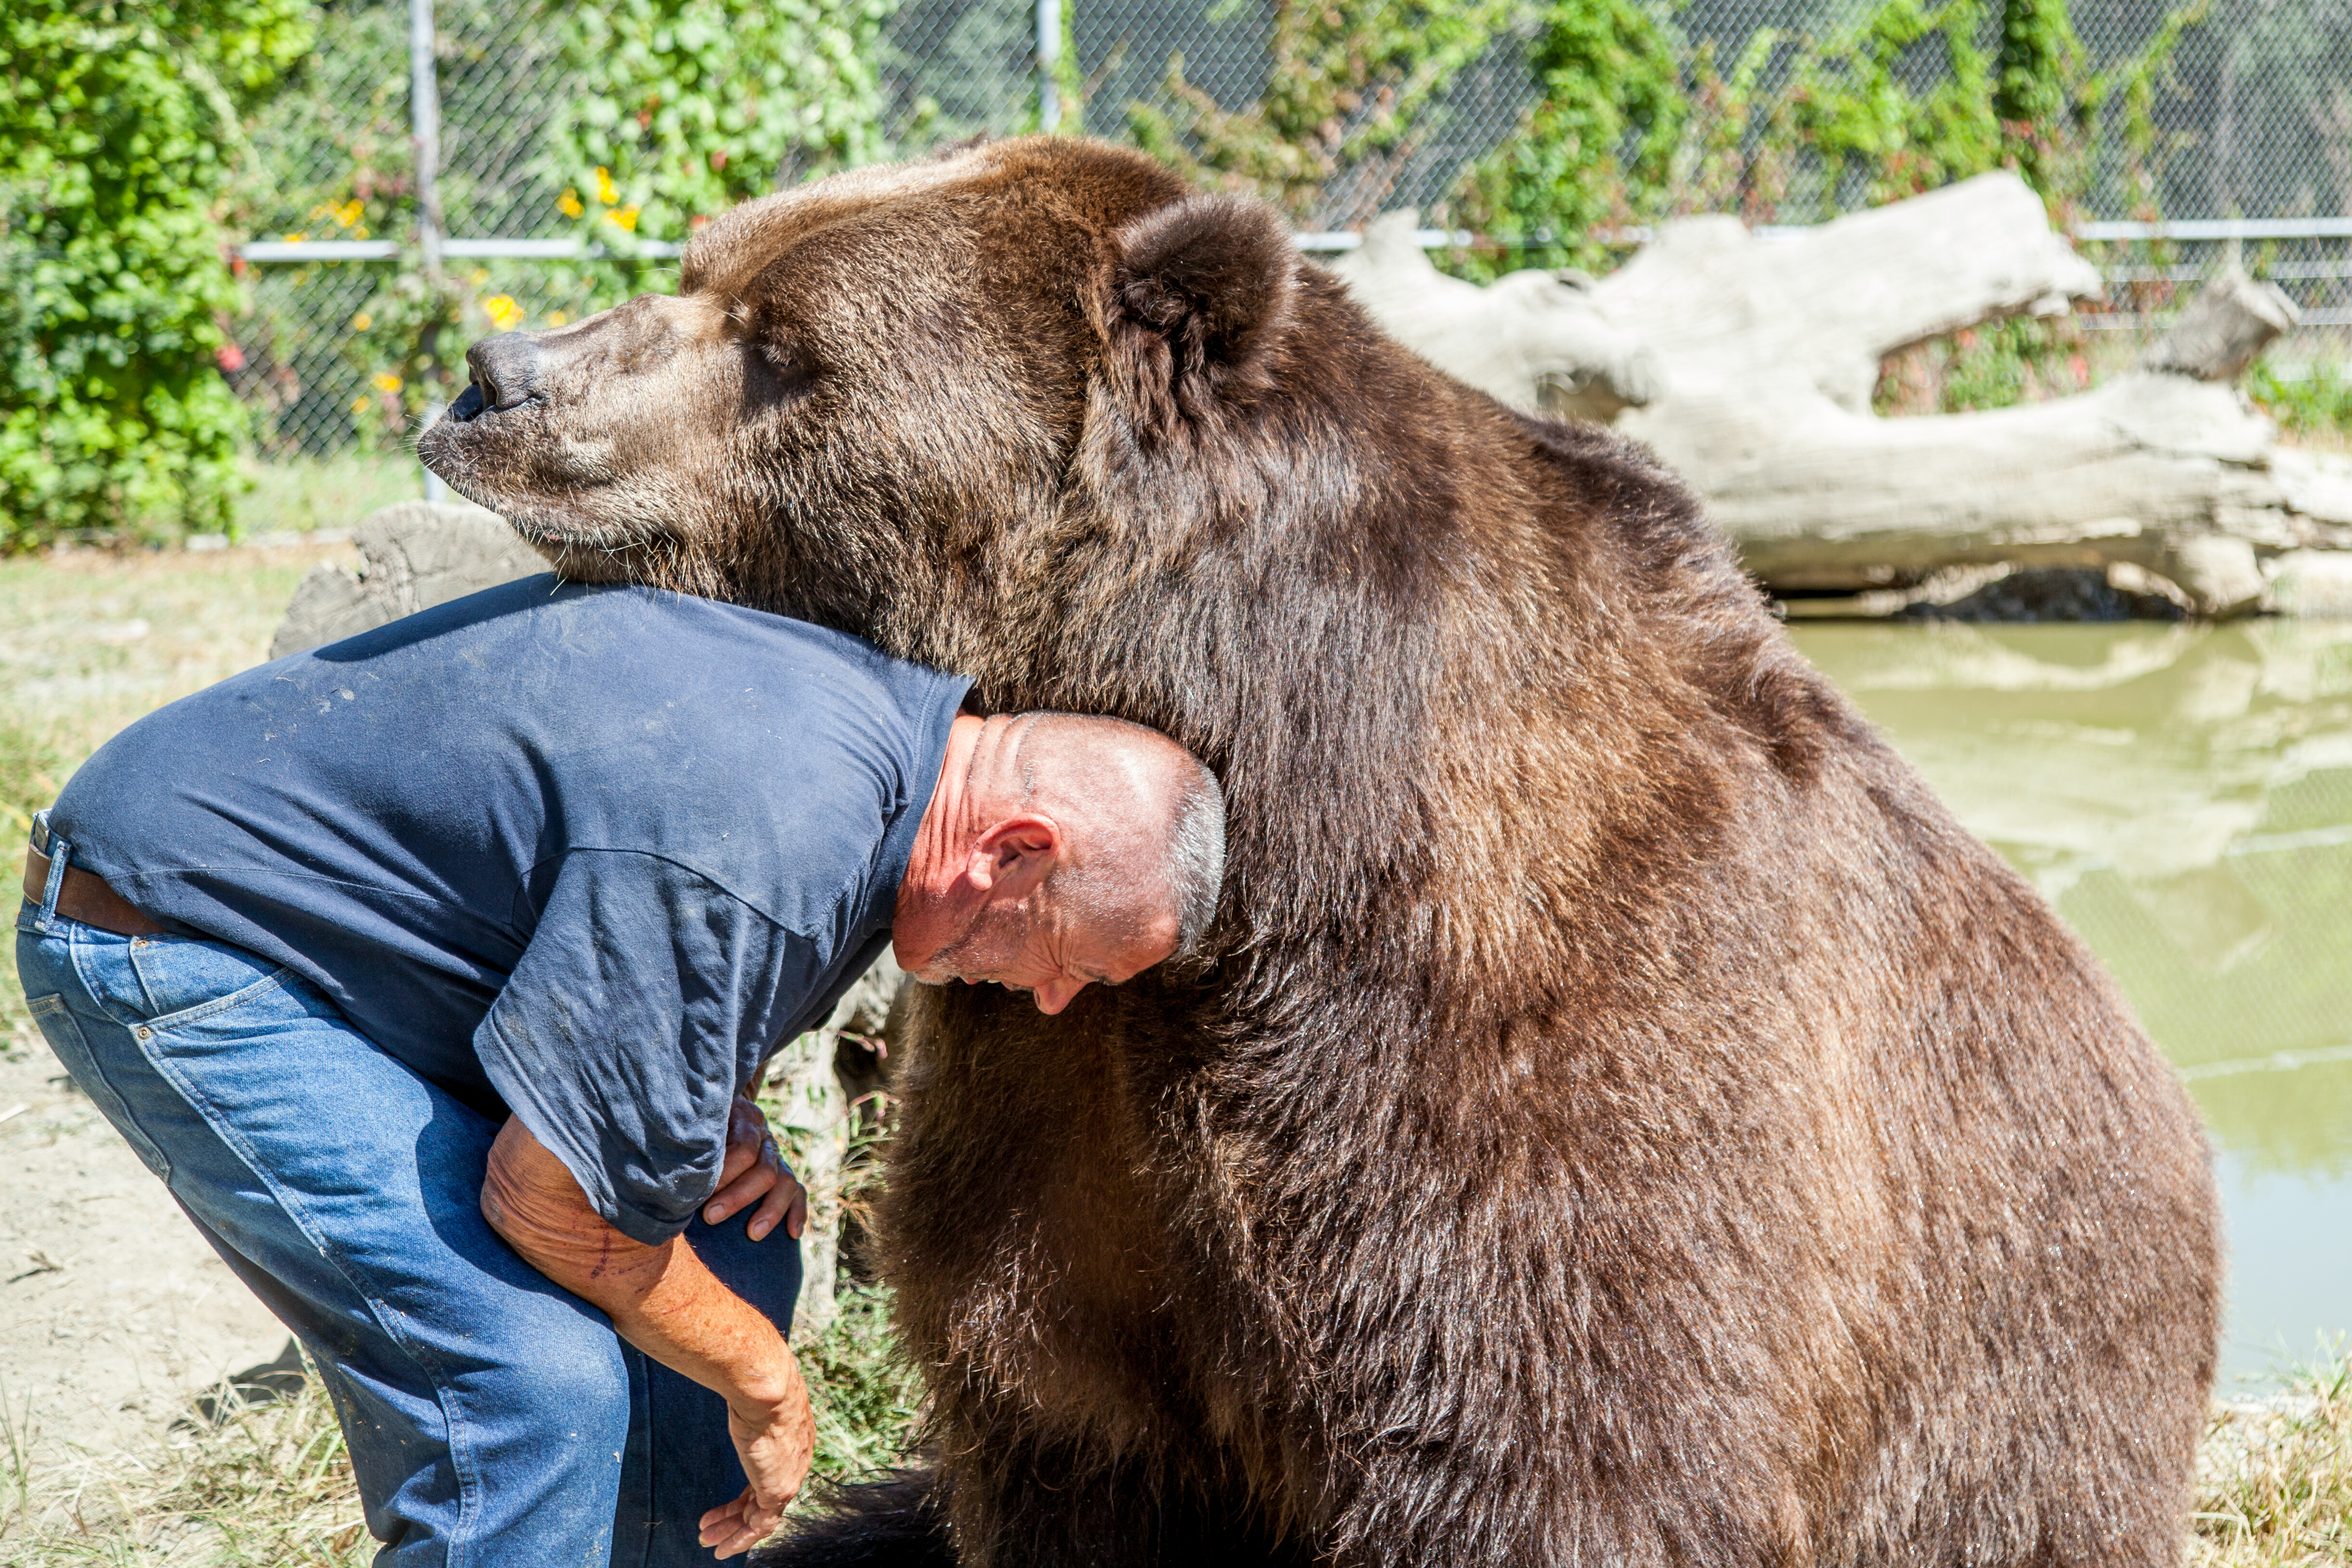 Jim Kowalczik with 22-year-old Kodiak bear Jimbo in one of the bear's enclosures at the Orphaned Wildlife Center in Otisville on Sept. 7, 2016. (James Smith)